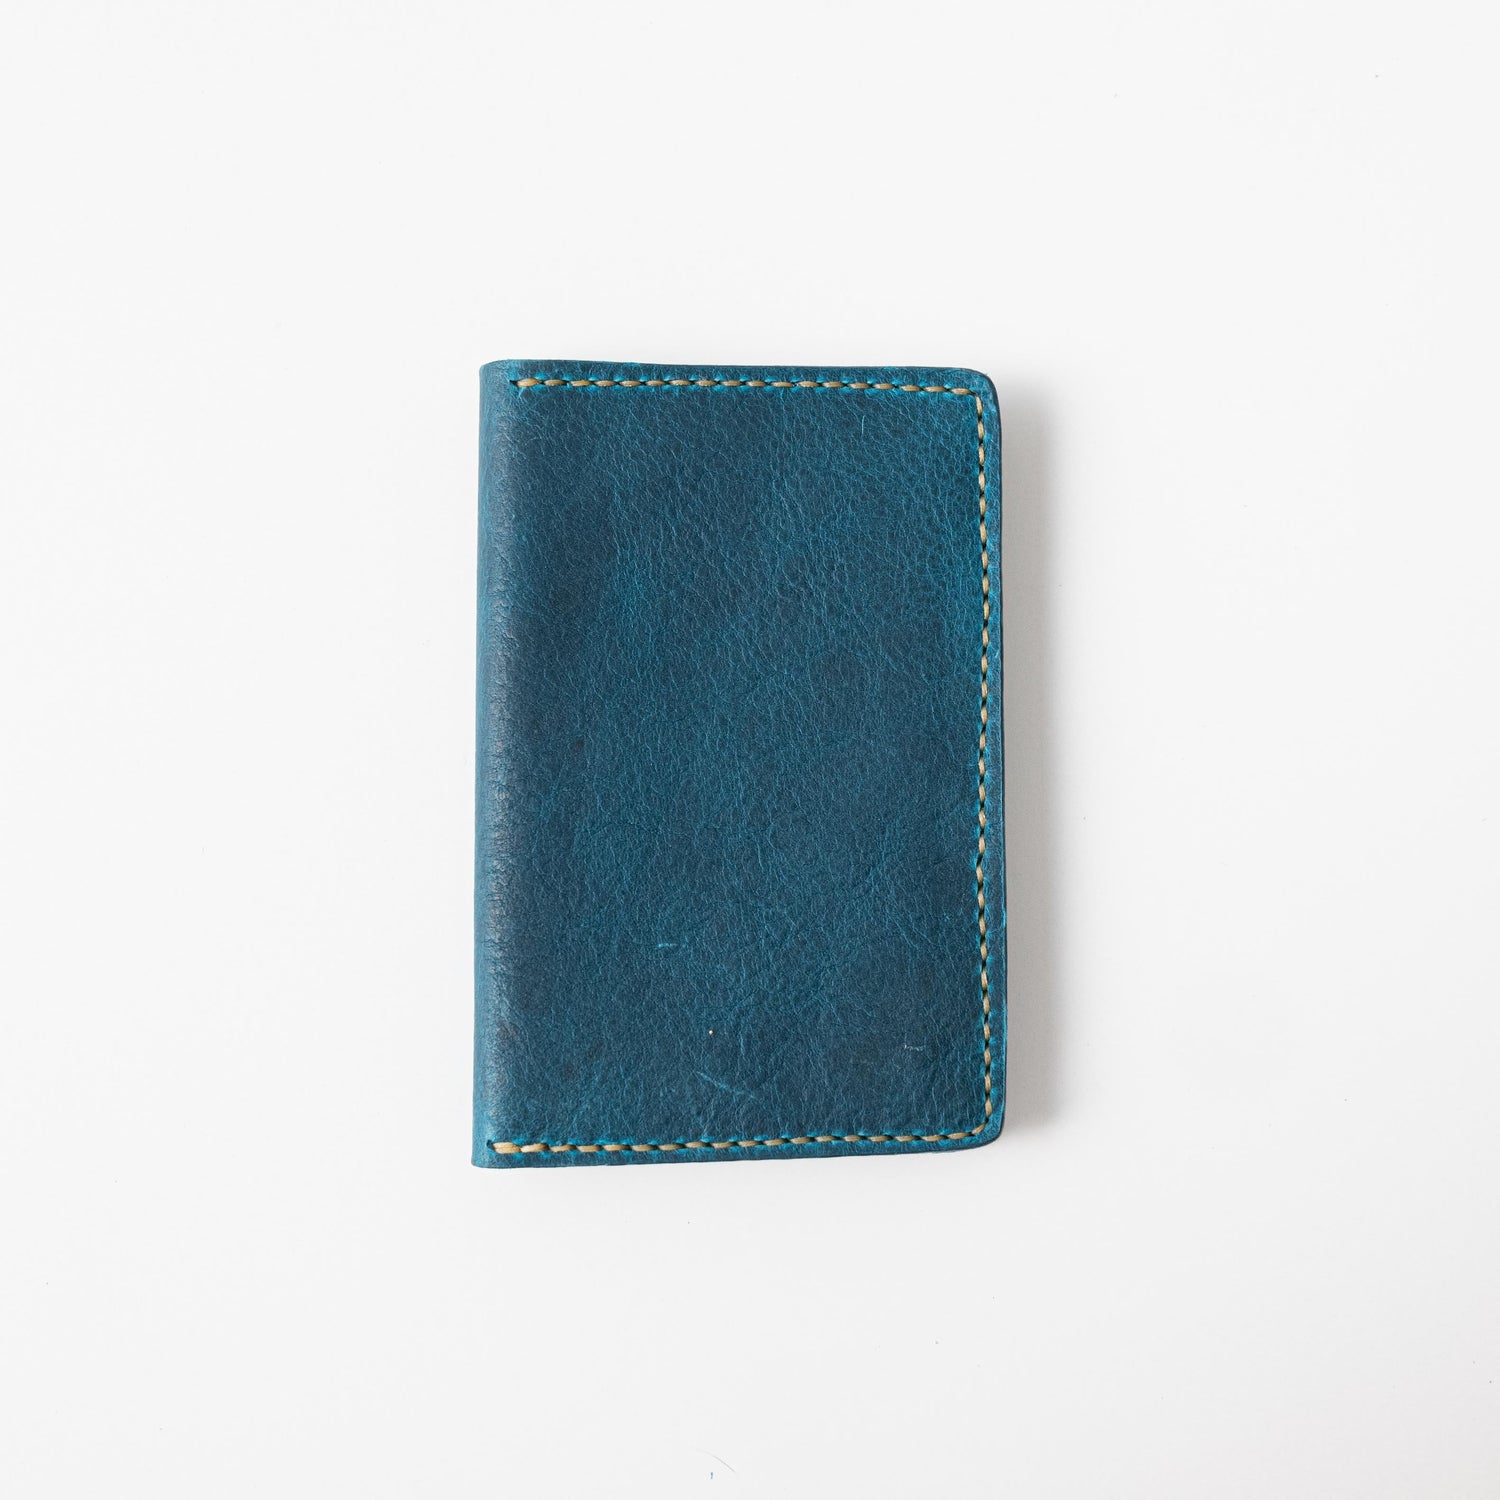 Petrol Blue Bison Notebook Wallet- leather notebook cover - passport holder - KMM &amp; Co.